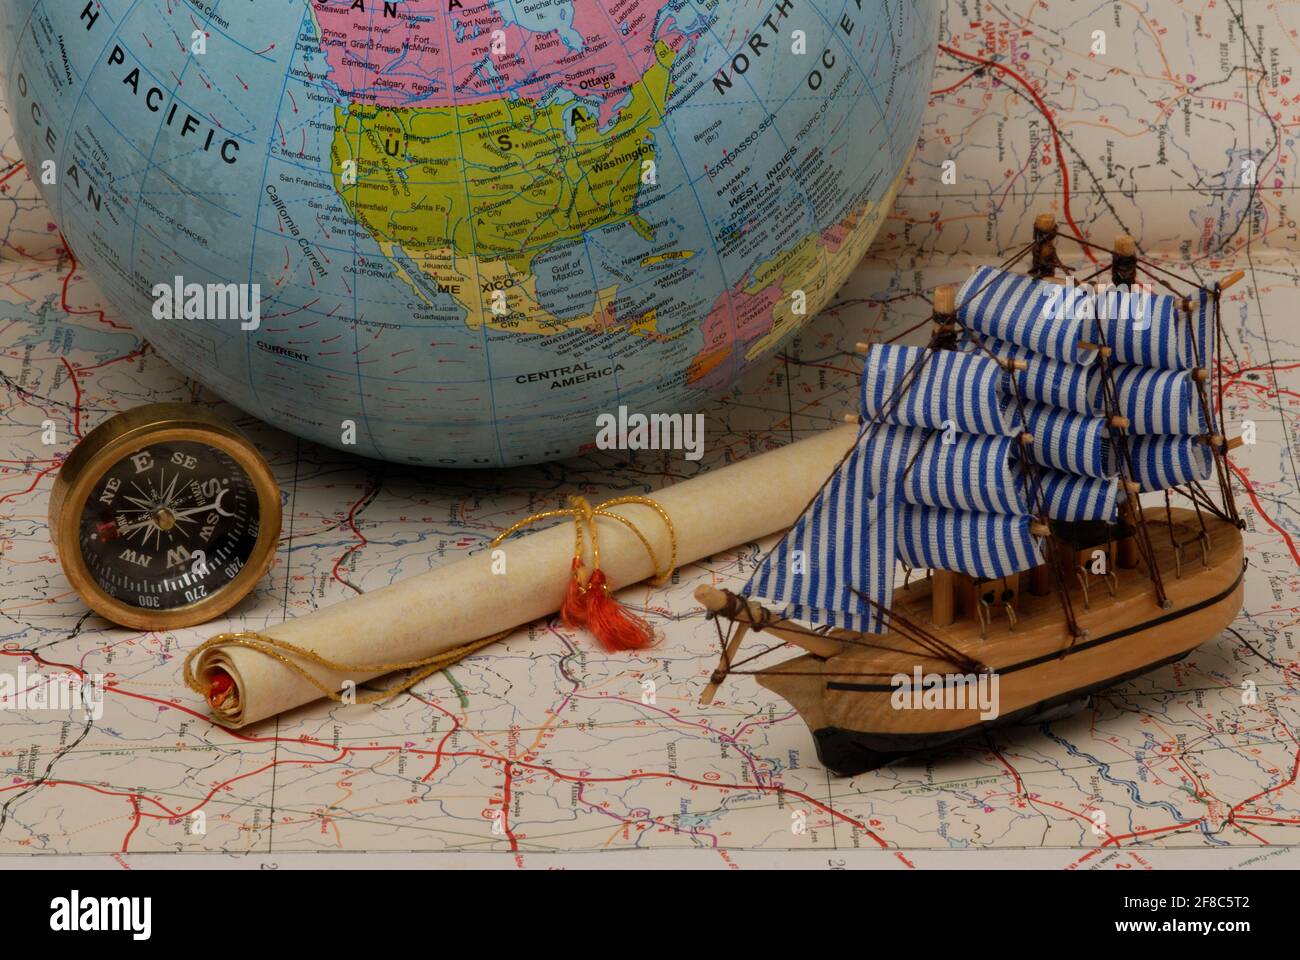 Mumbai, Maharashtra, India, Asia, Sep. 05, 2006 - Old pirate sailboat; ship model; Compass; Globe on old mapTravel, adventure concept Stock Photo